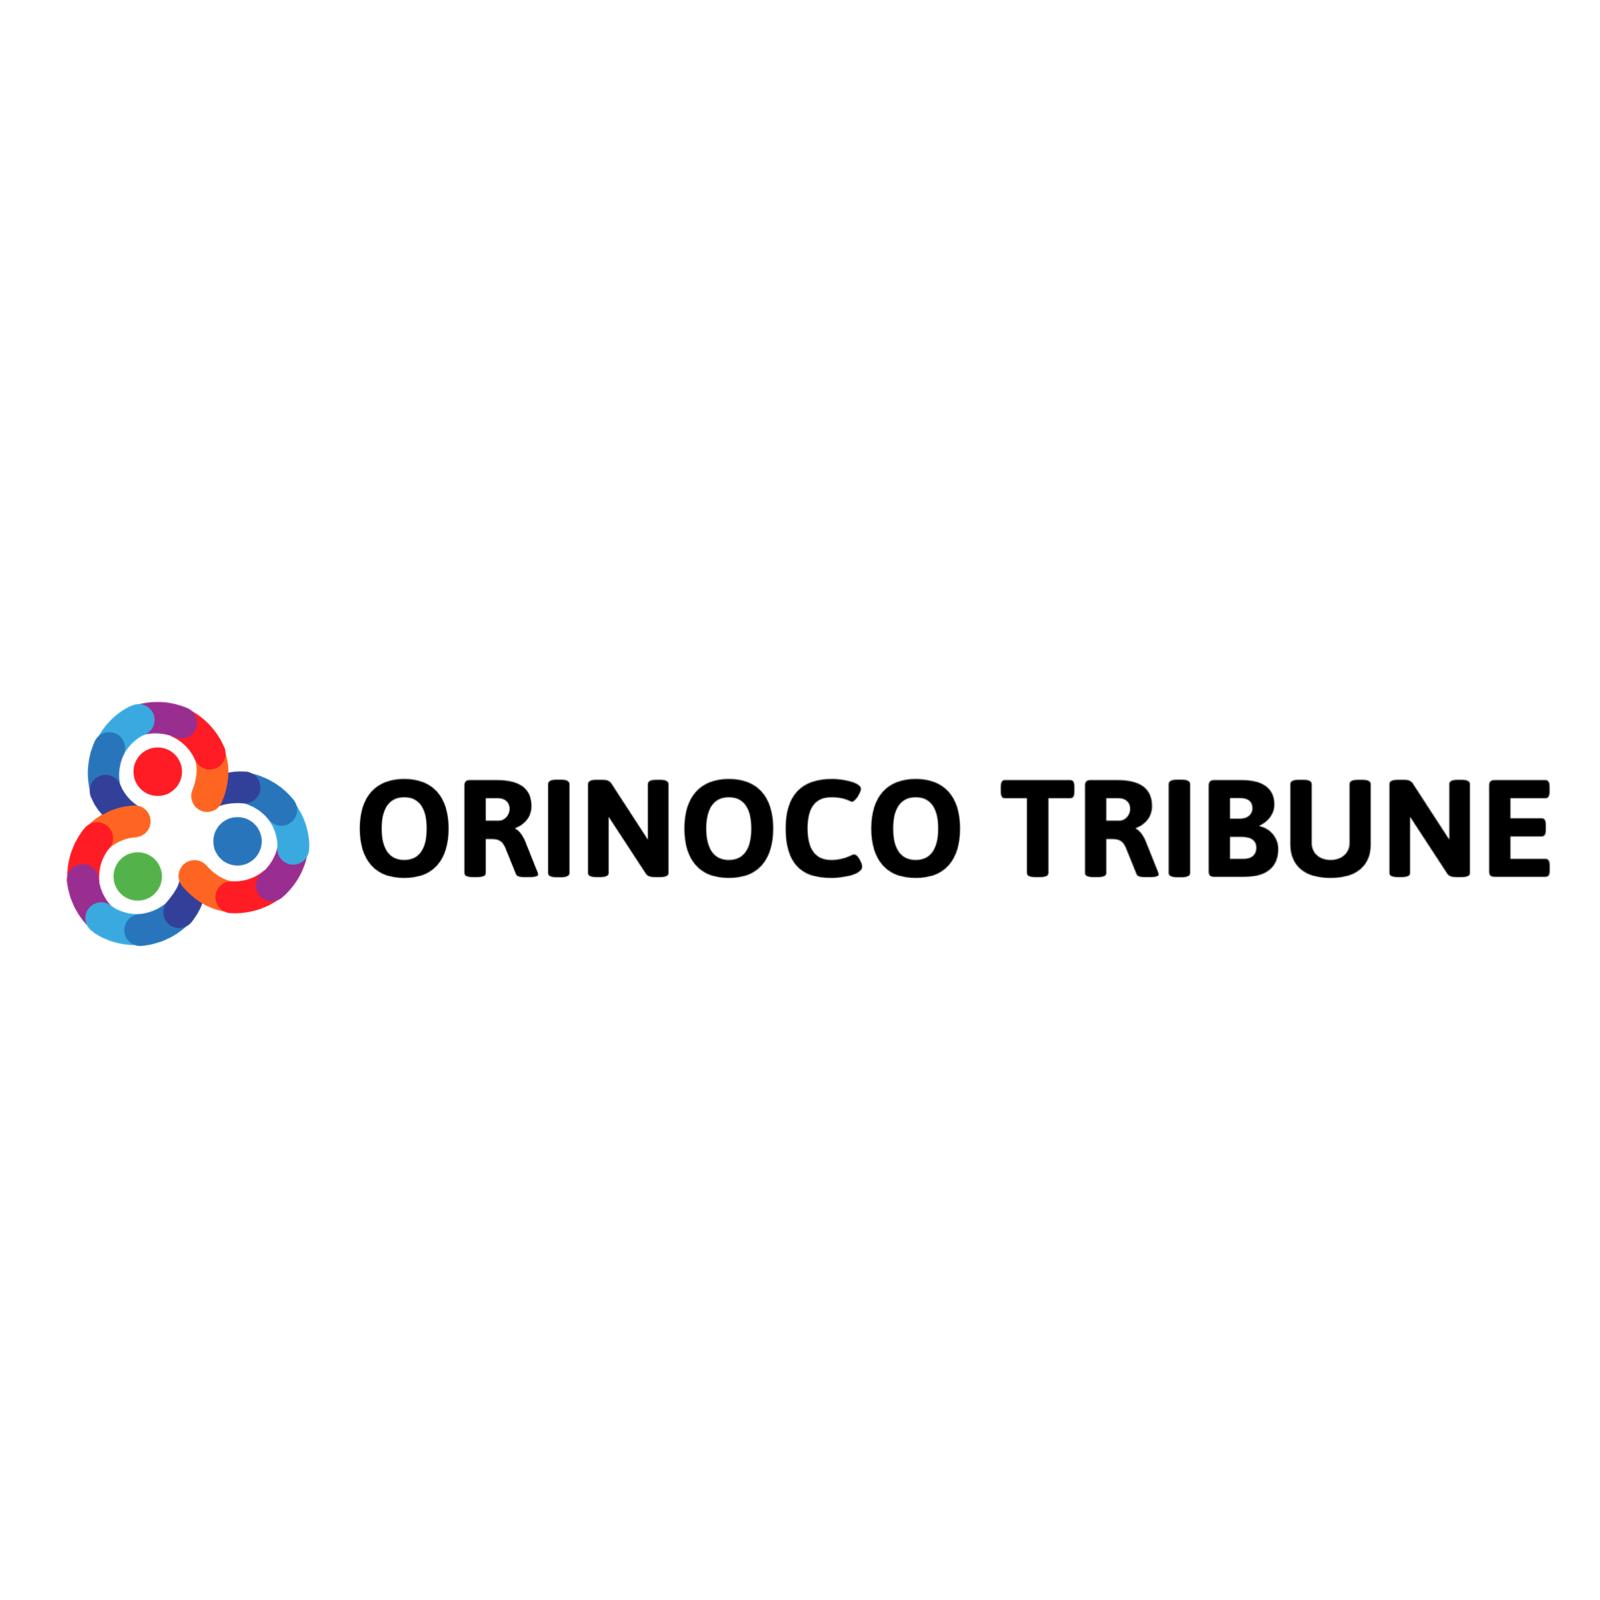 Orinoco Tribune logo